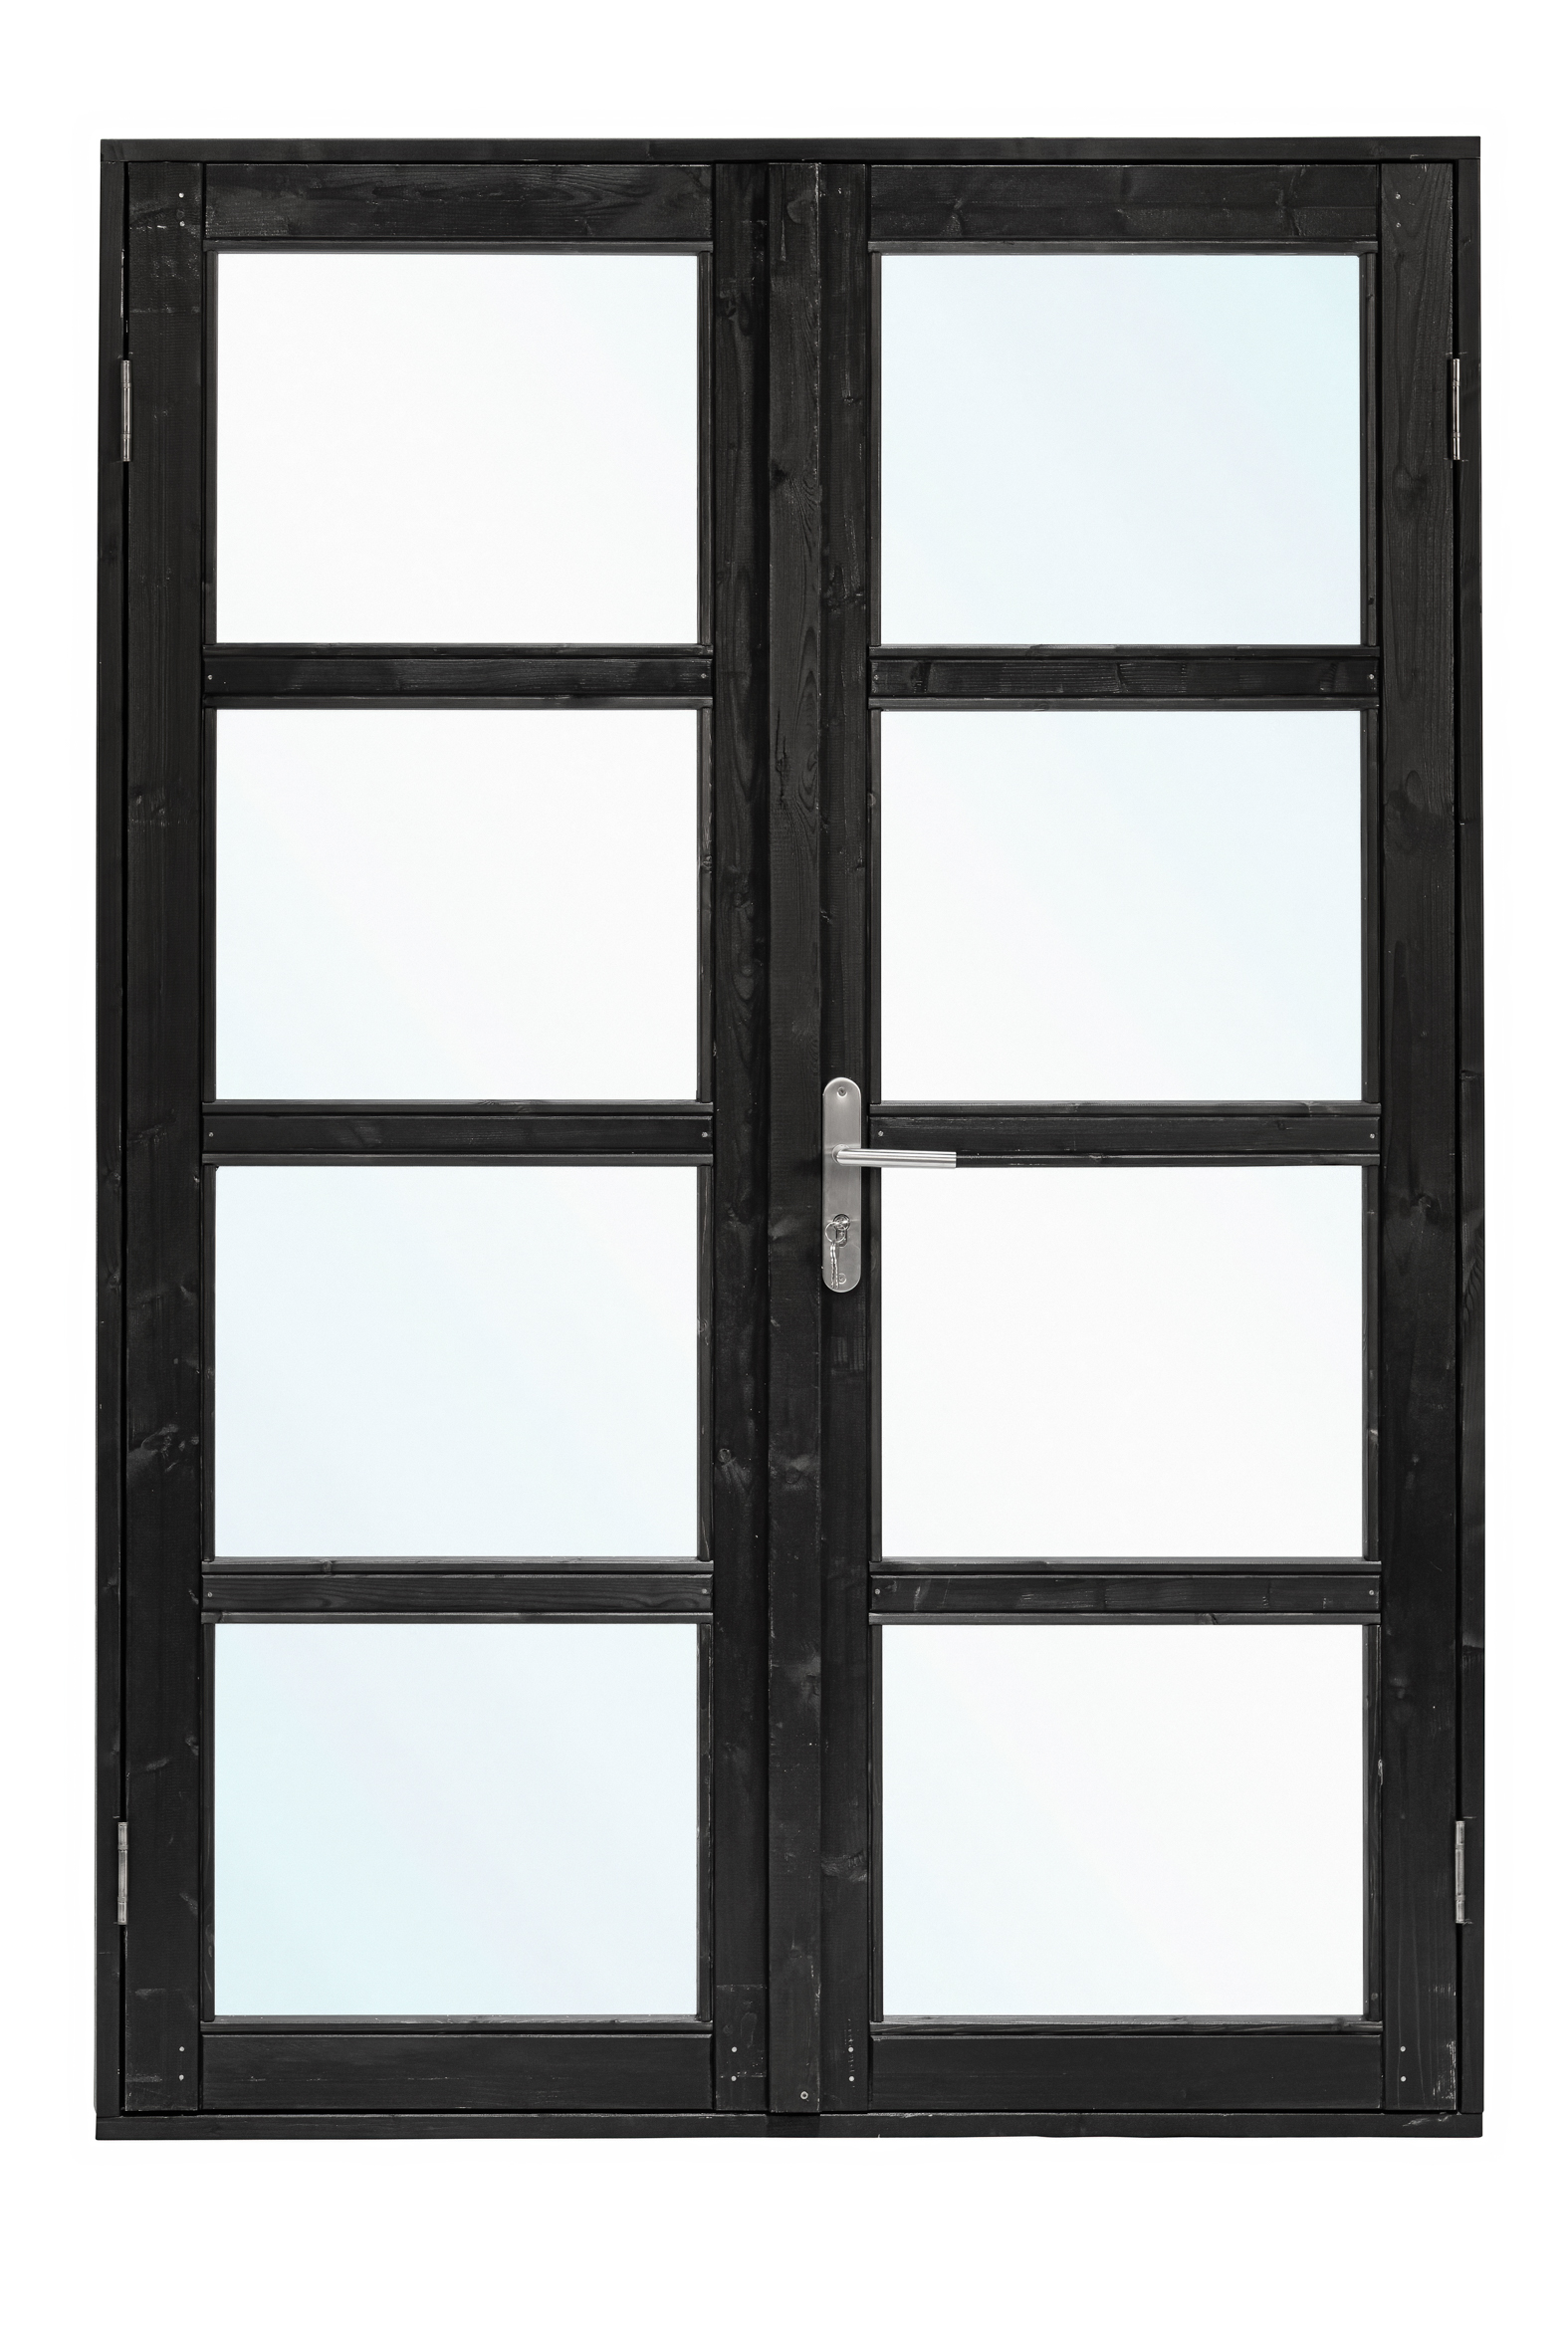 aantrekken gegevens Straat Deur dubbel met raam modern RS vuren 145x210cm zwart | Elegant Wood